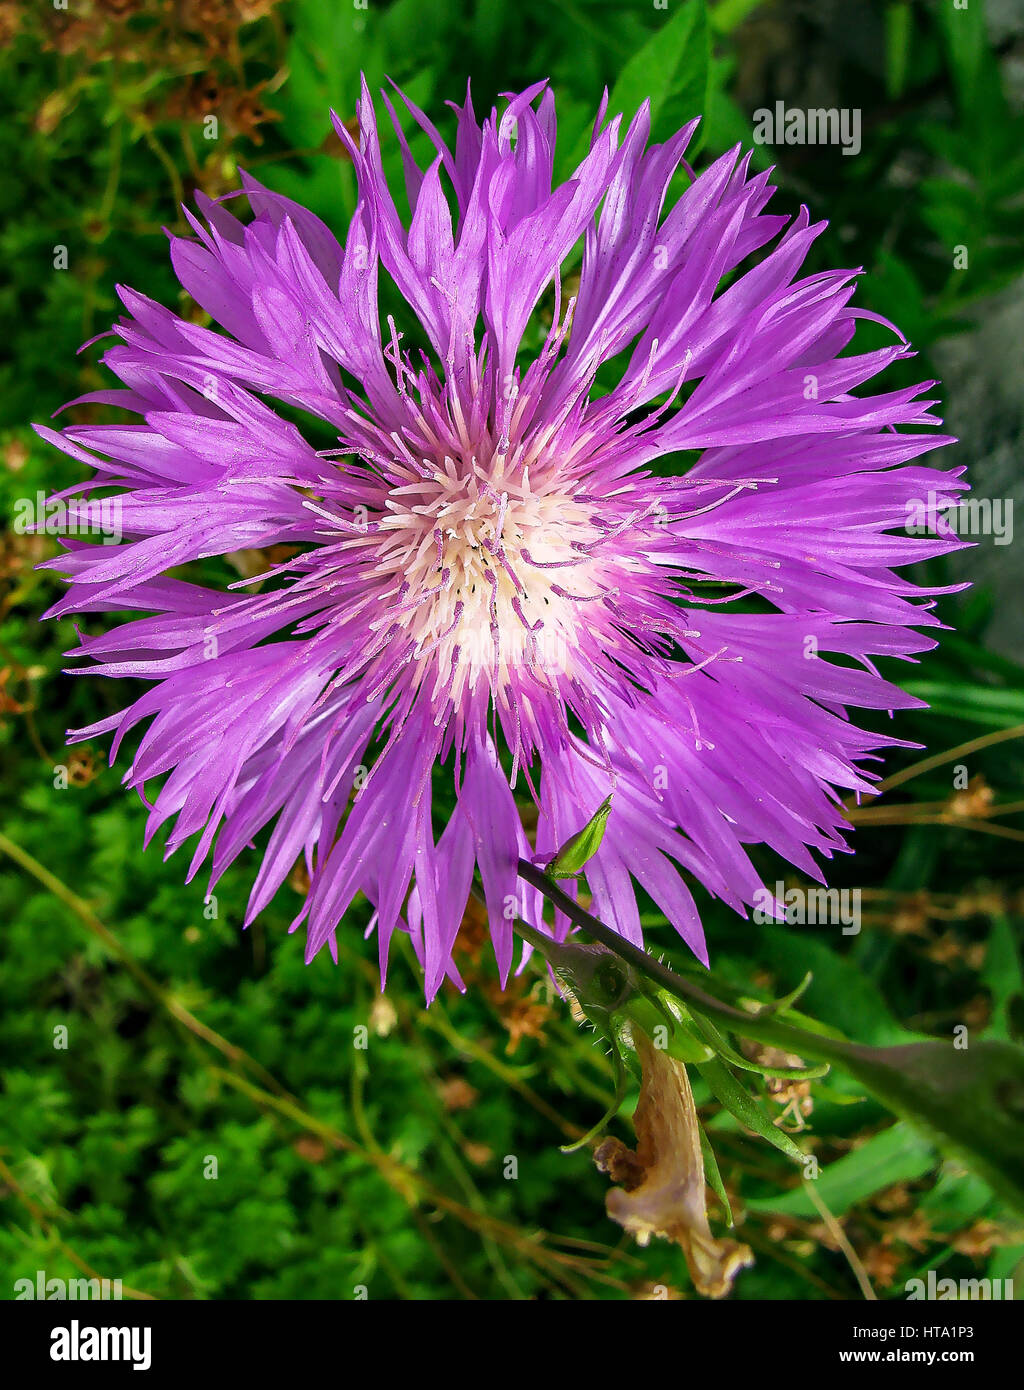 Herb of the family Asteraceae - Centaurea Stock Photo